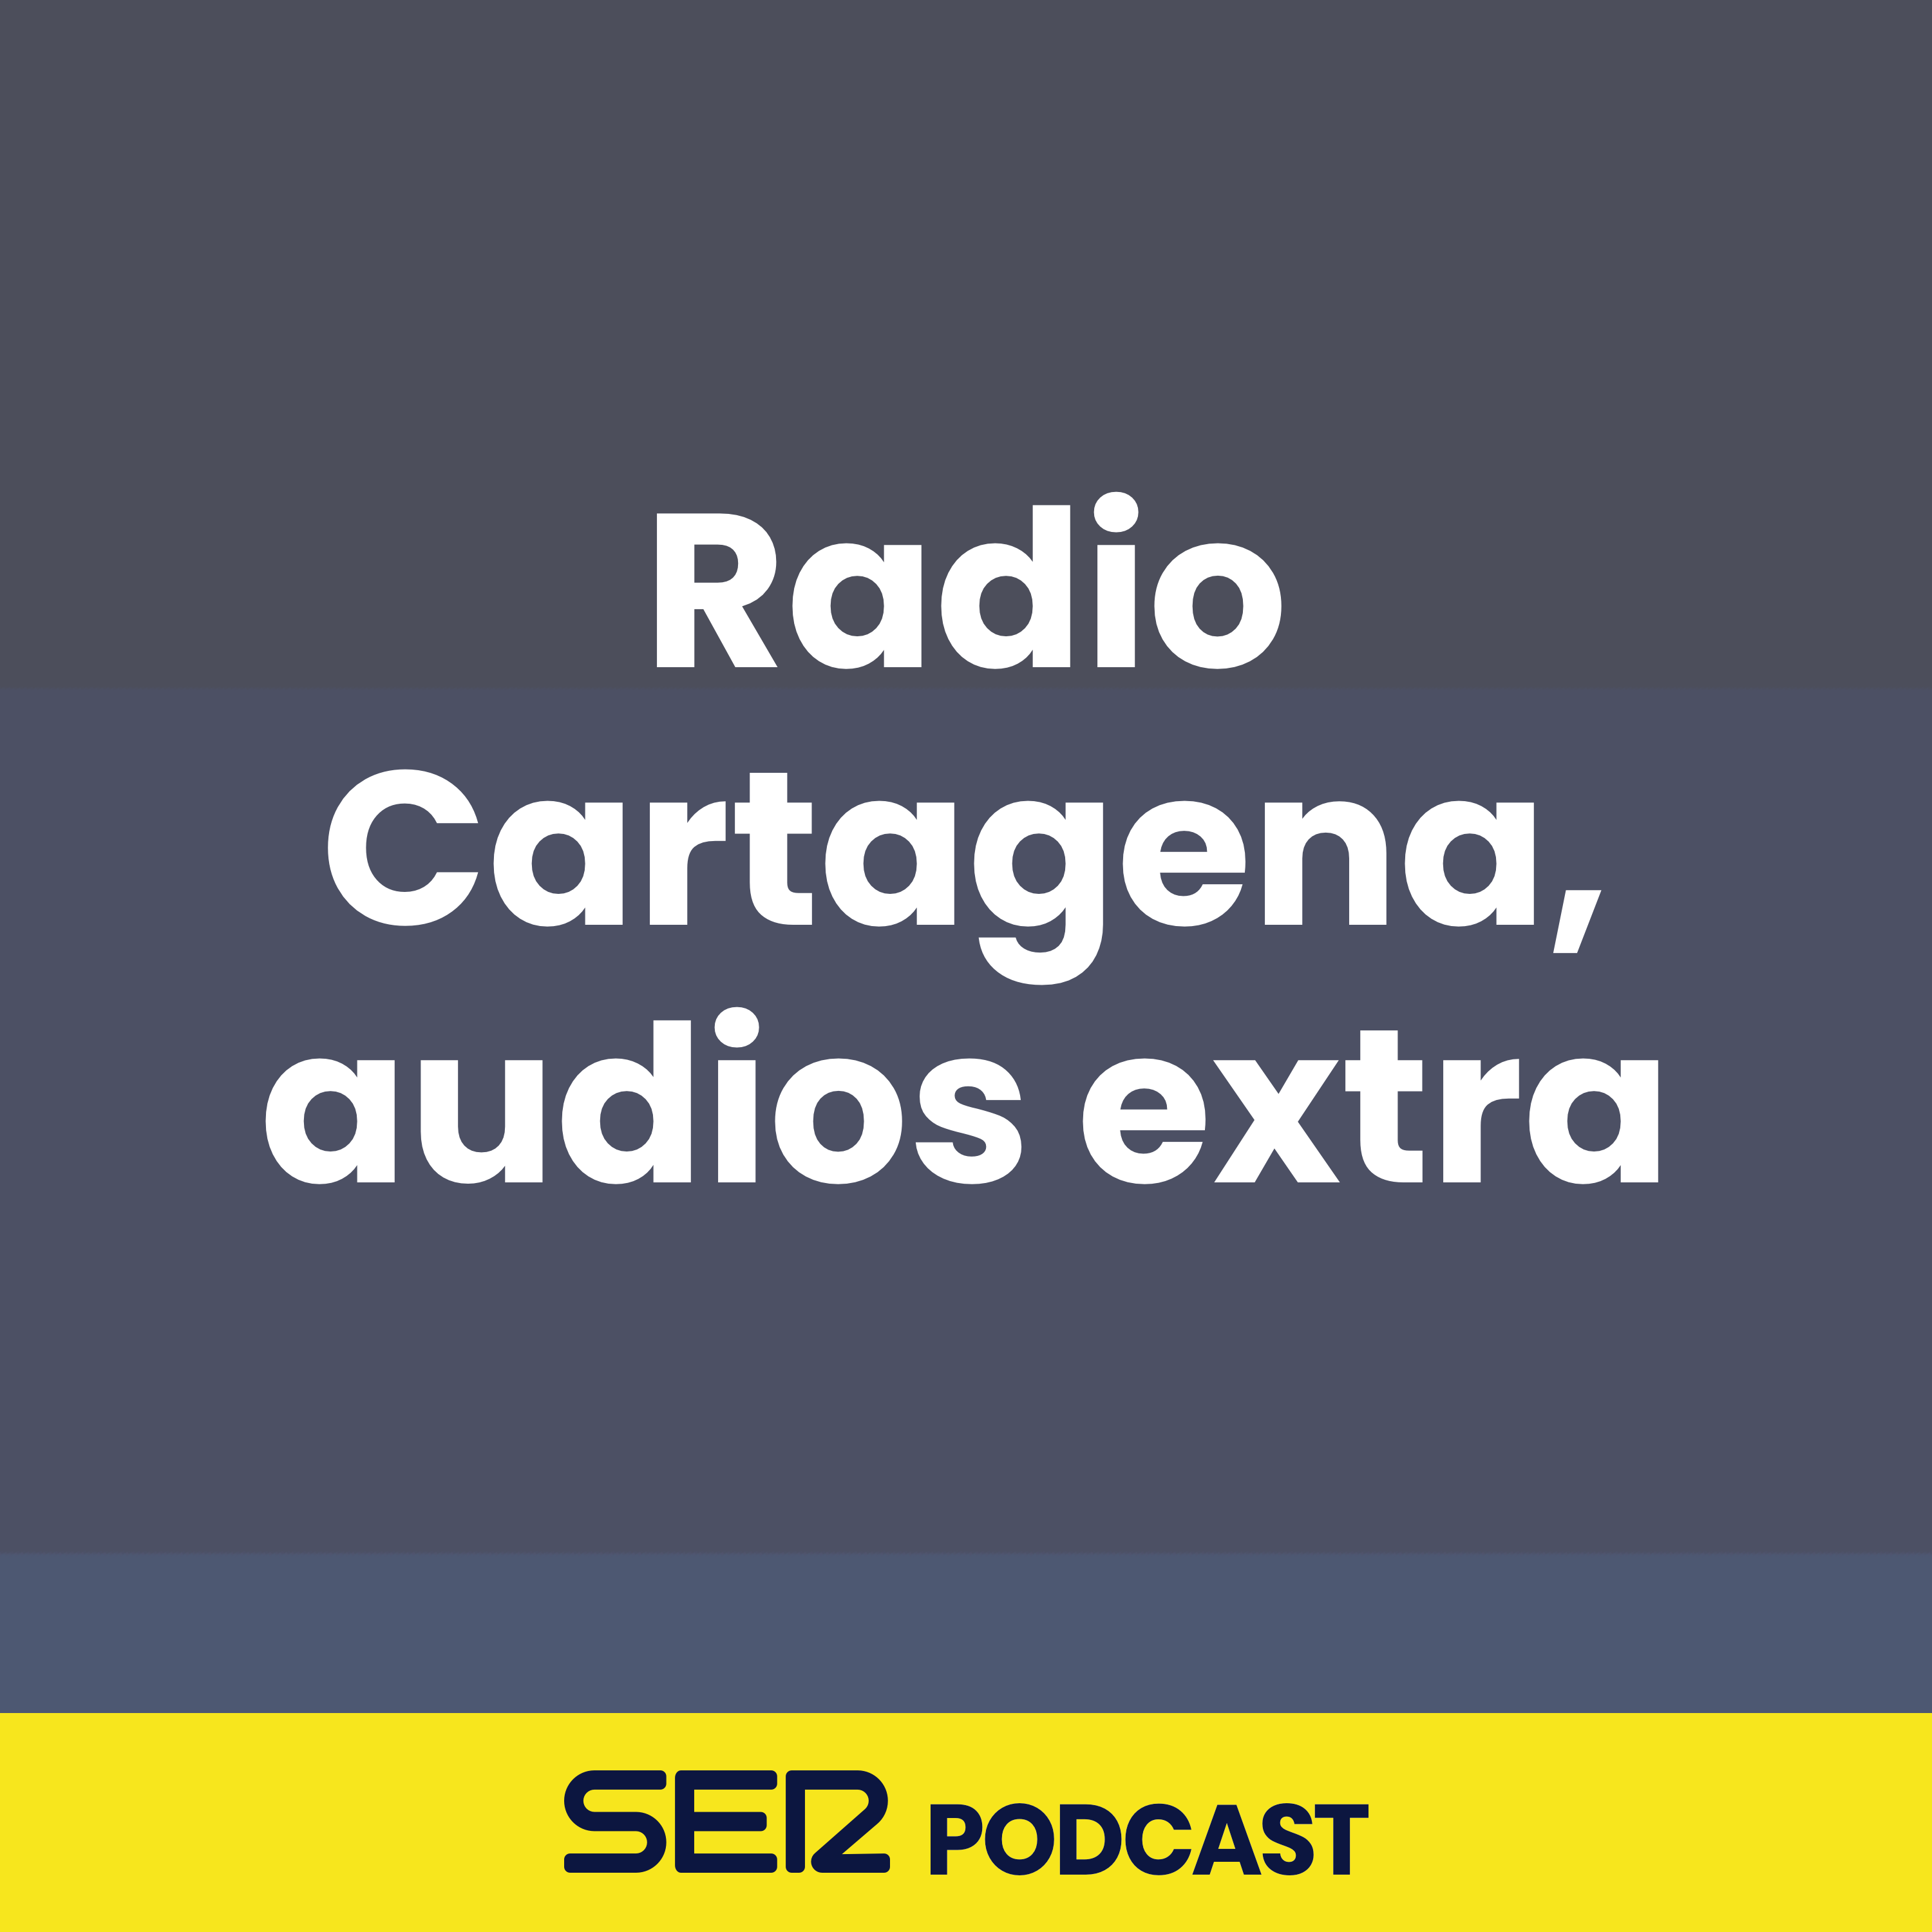 Radio Cartagena, audios extra